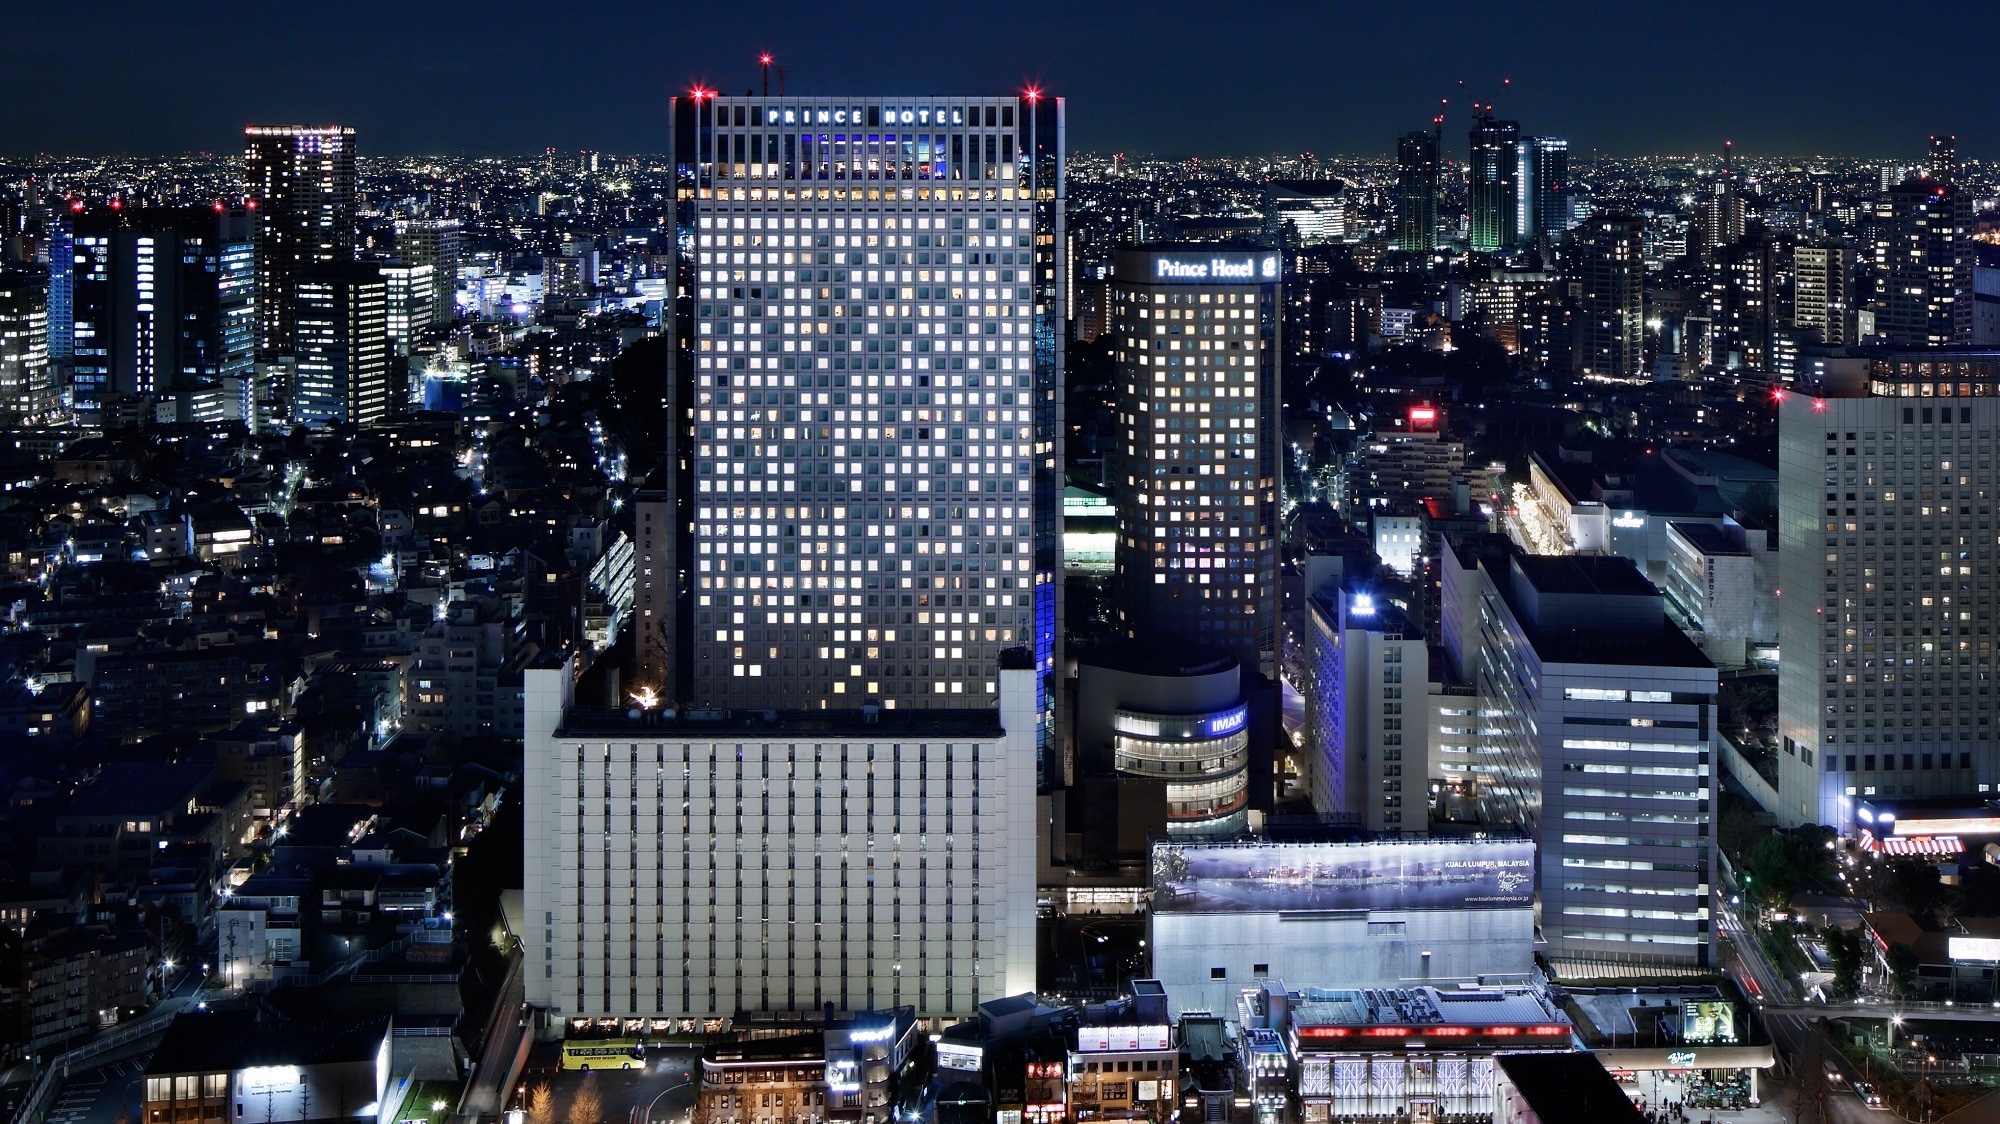 Shinagawa Prince Hotel panoramic view (night)